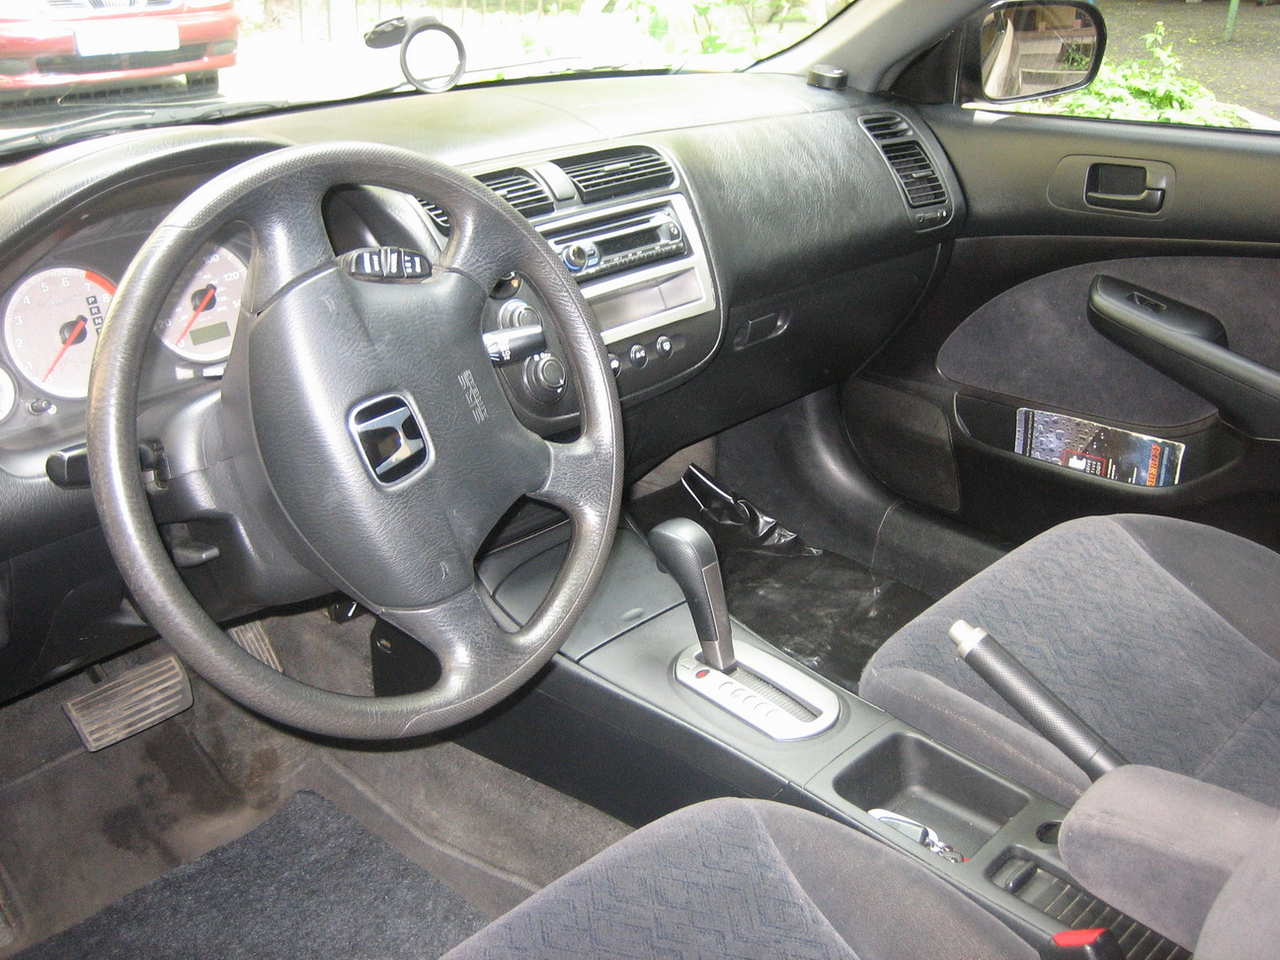 Honda Civic 2002 Coupe Manual